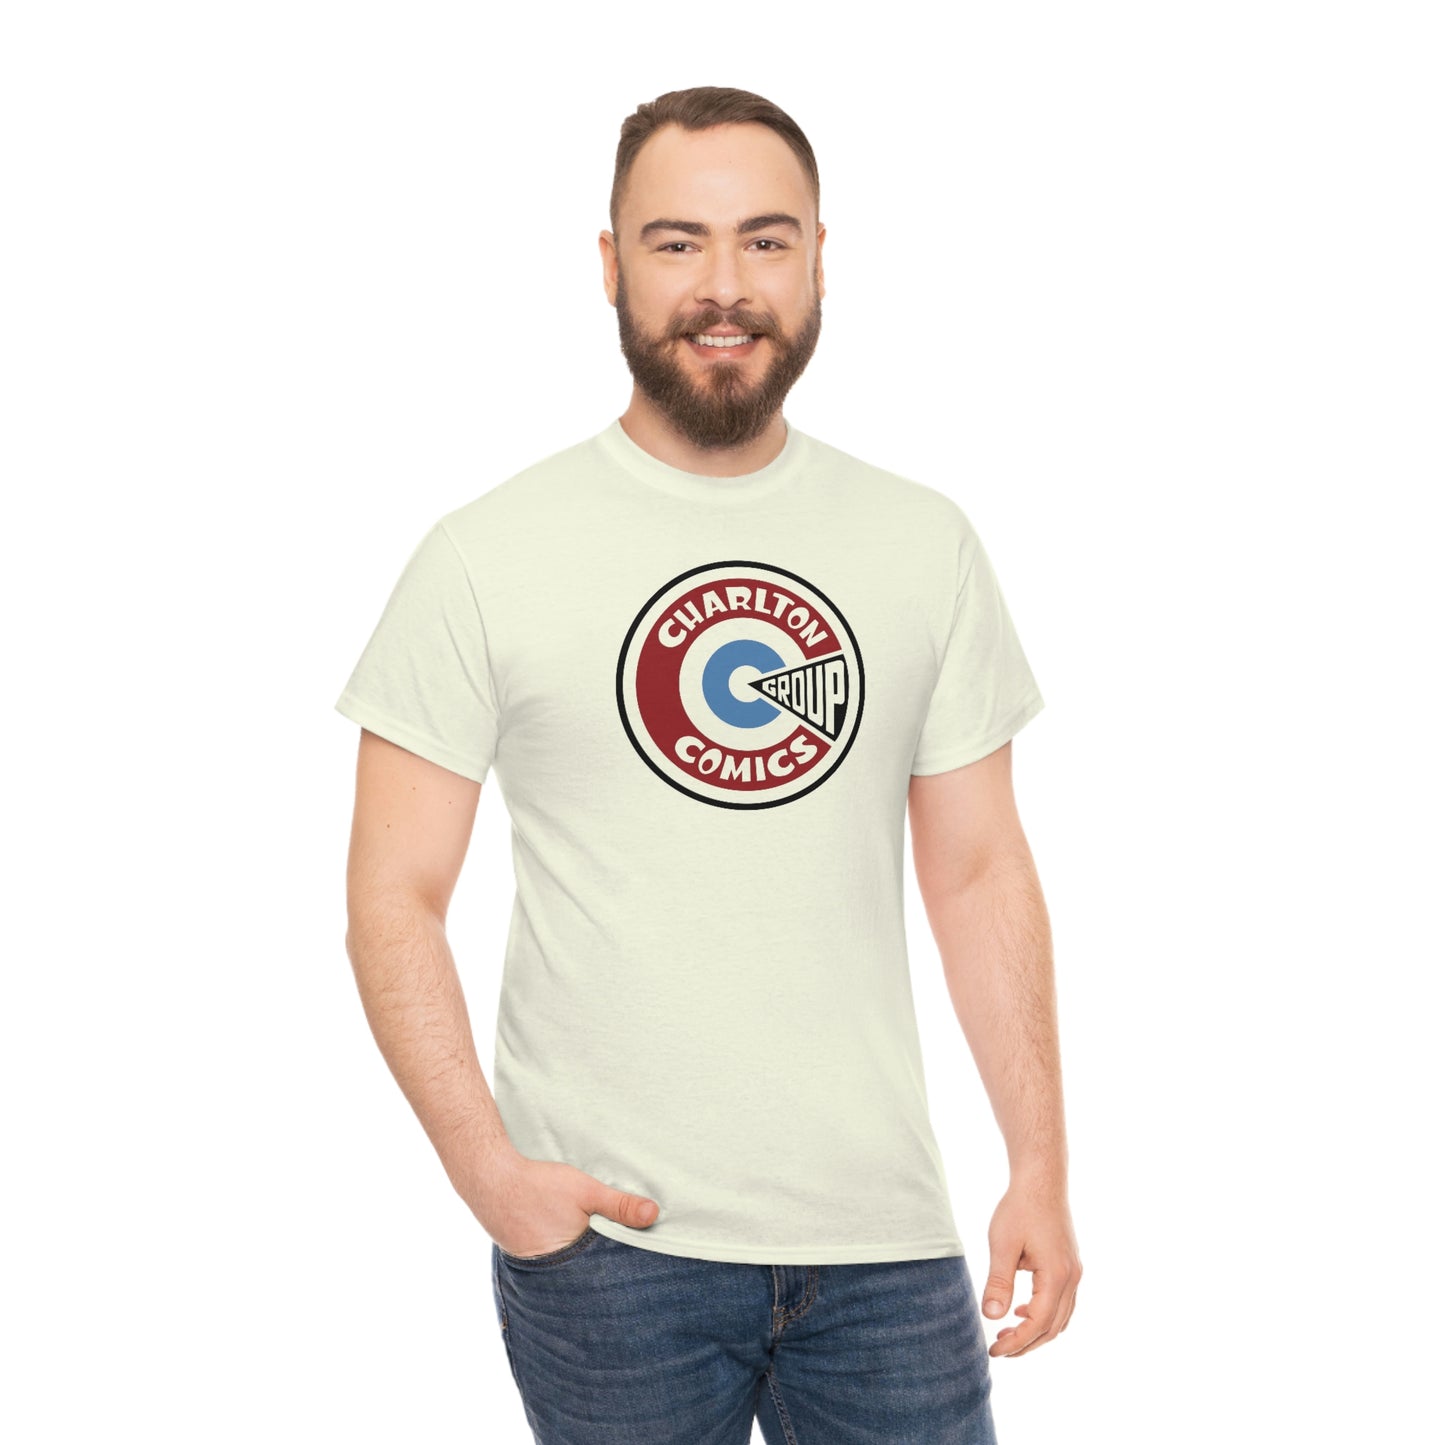 Charlton Comics Group T-Shirt